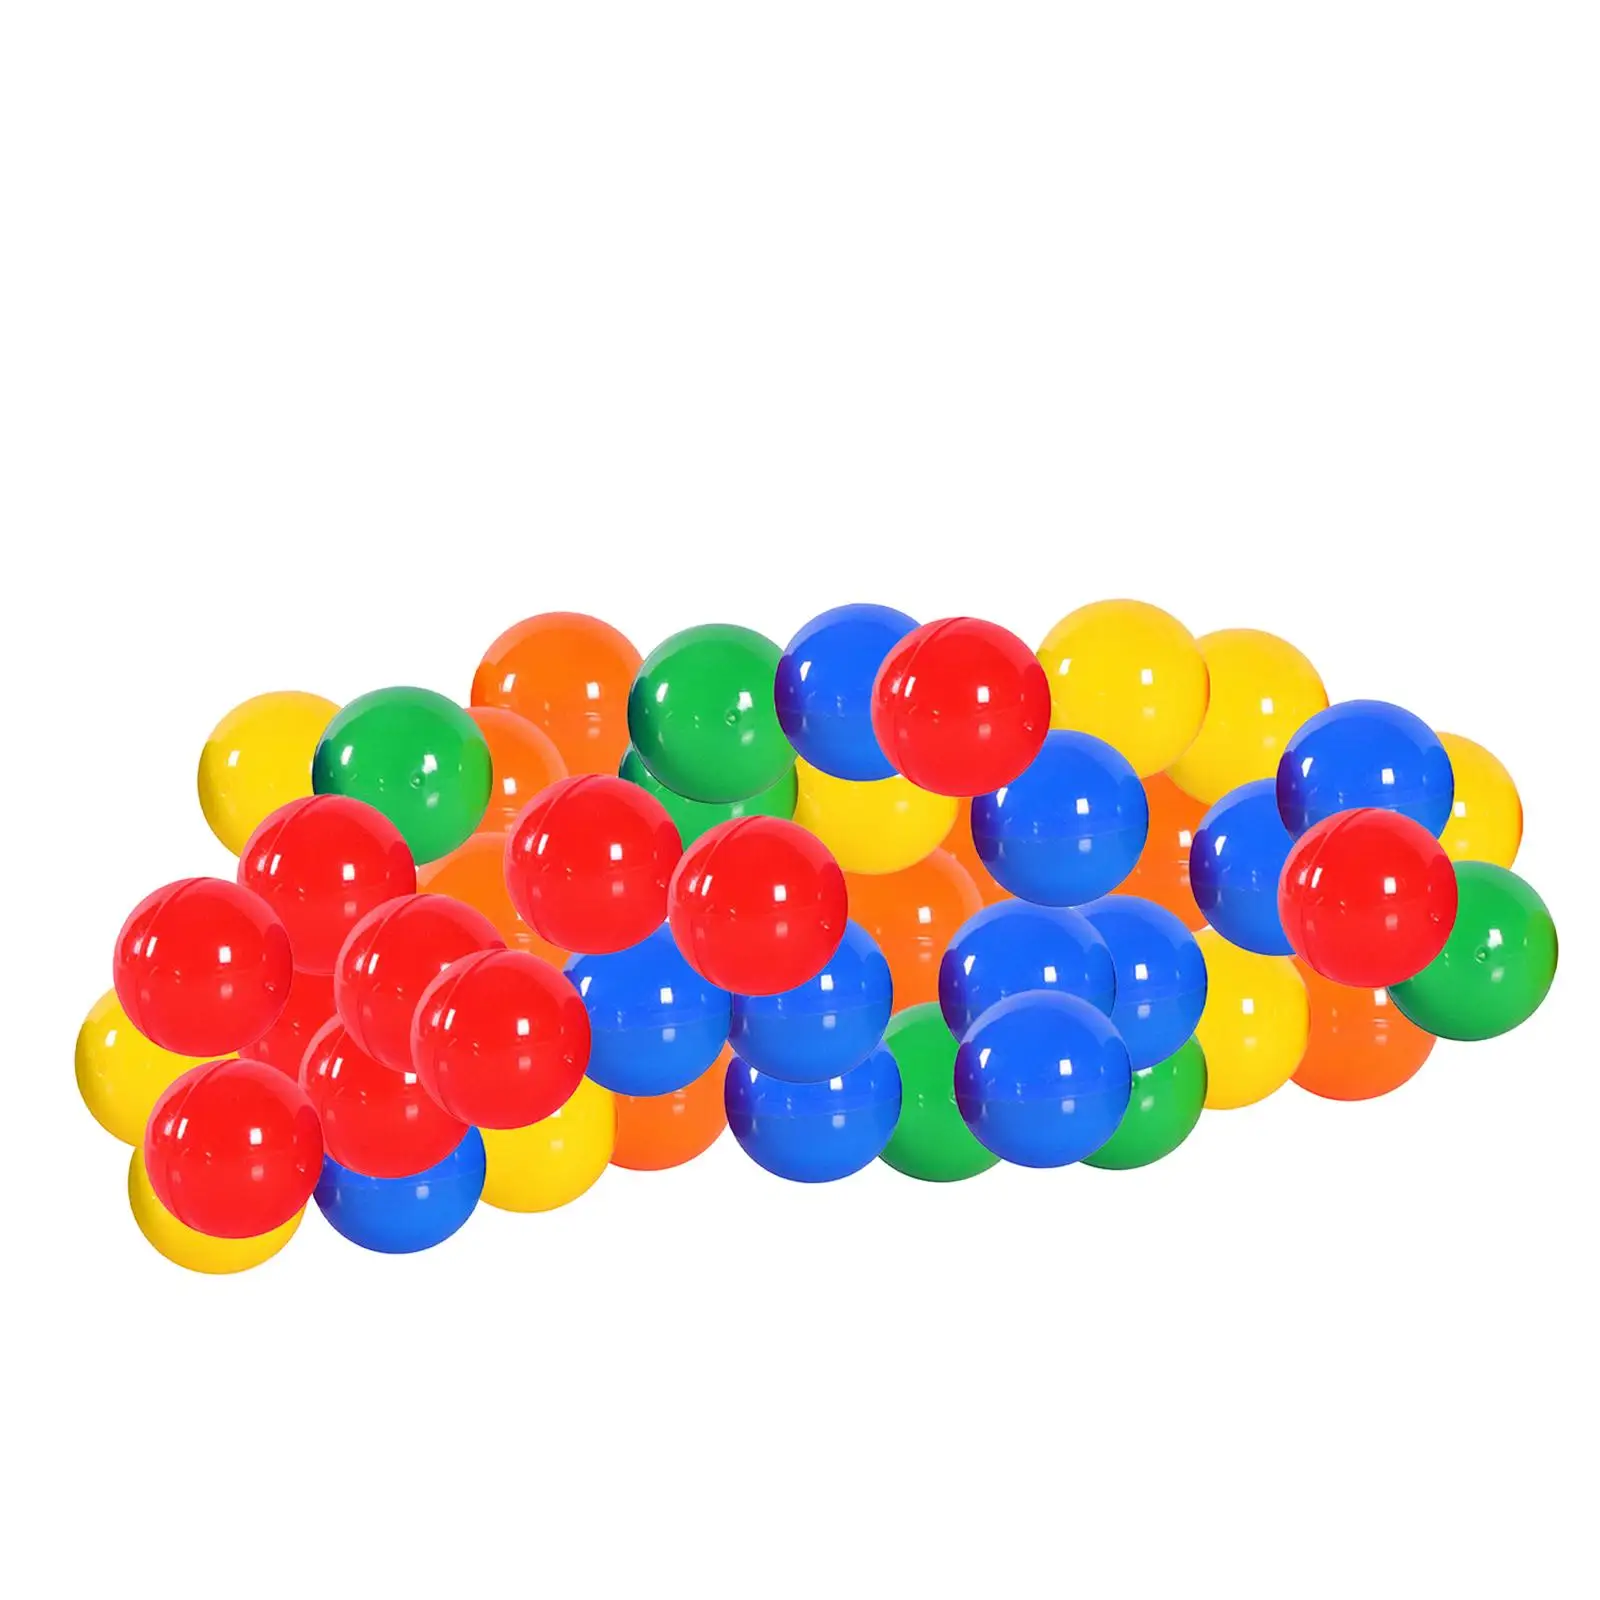 50Pcs Bingo Ball Supplies Opening Replacement Portable Universal Raffle Balls for entertainment Home Market Parties